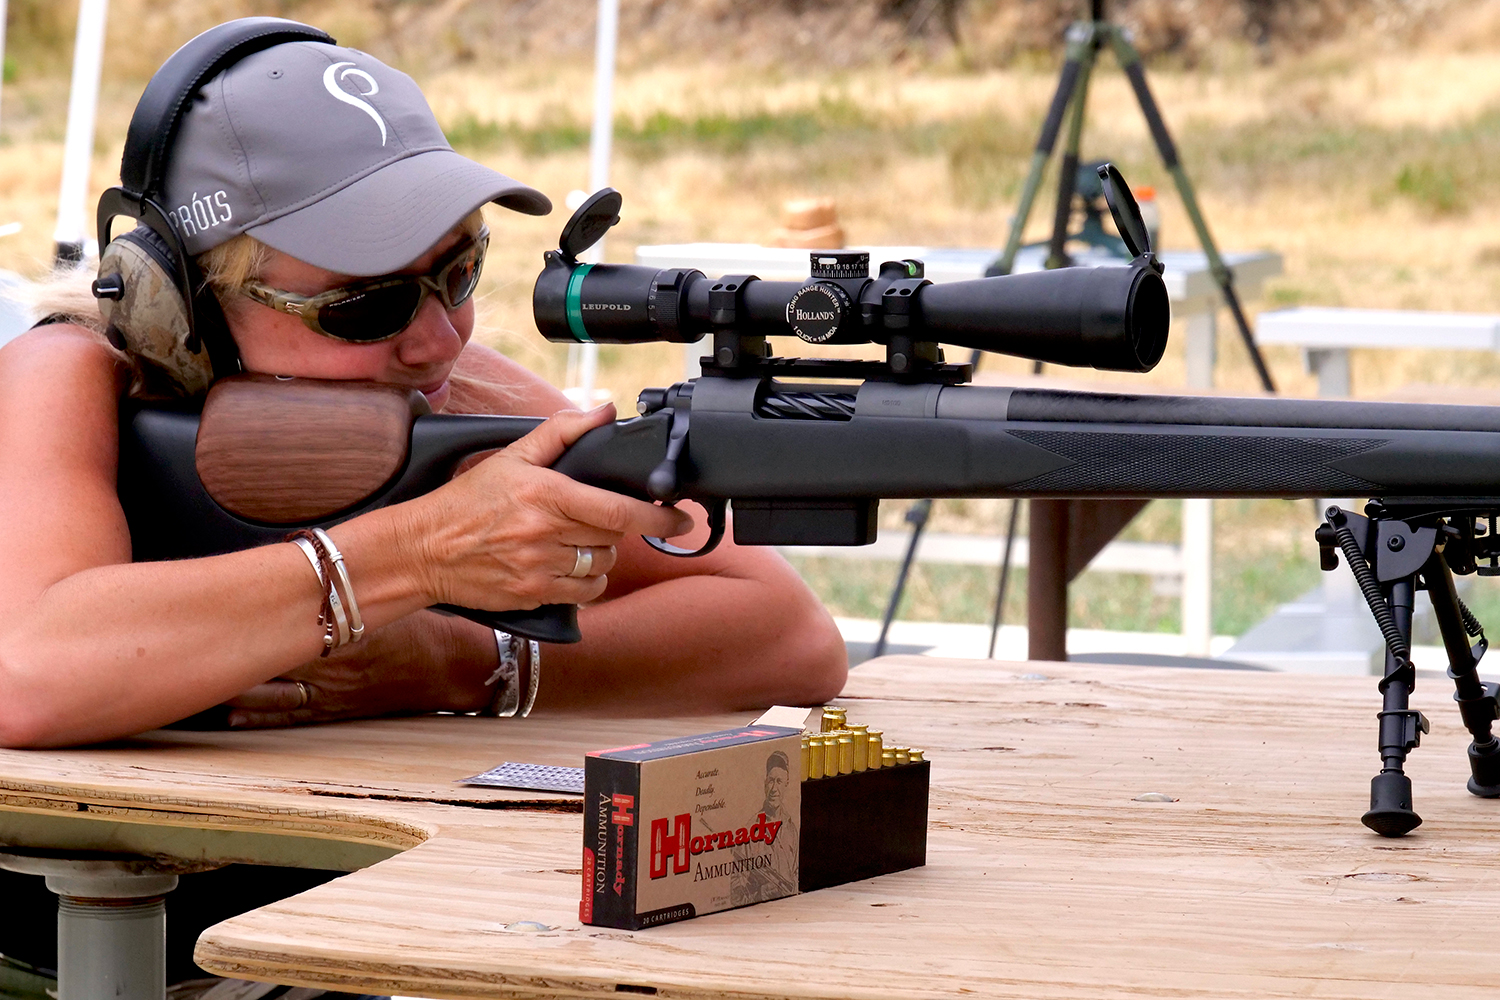 A woman rifle shooter aims a rifle at a shooting range.